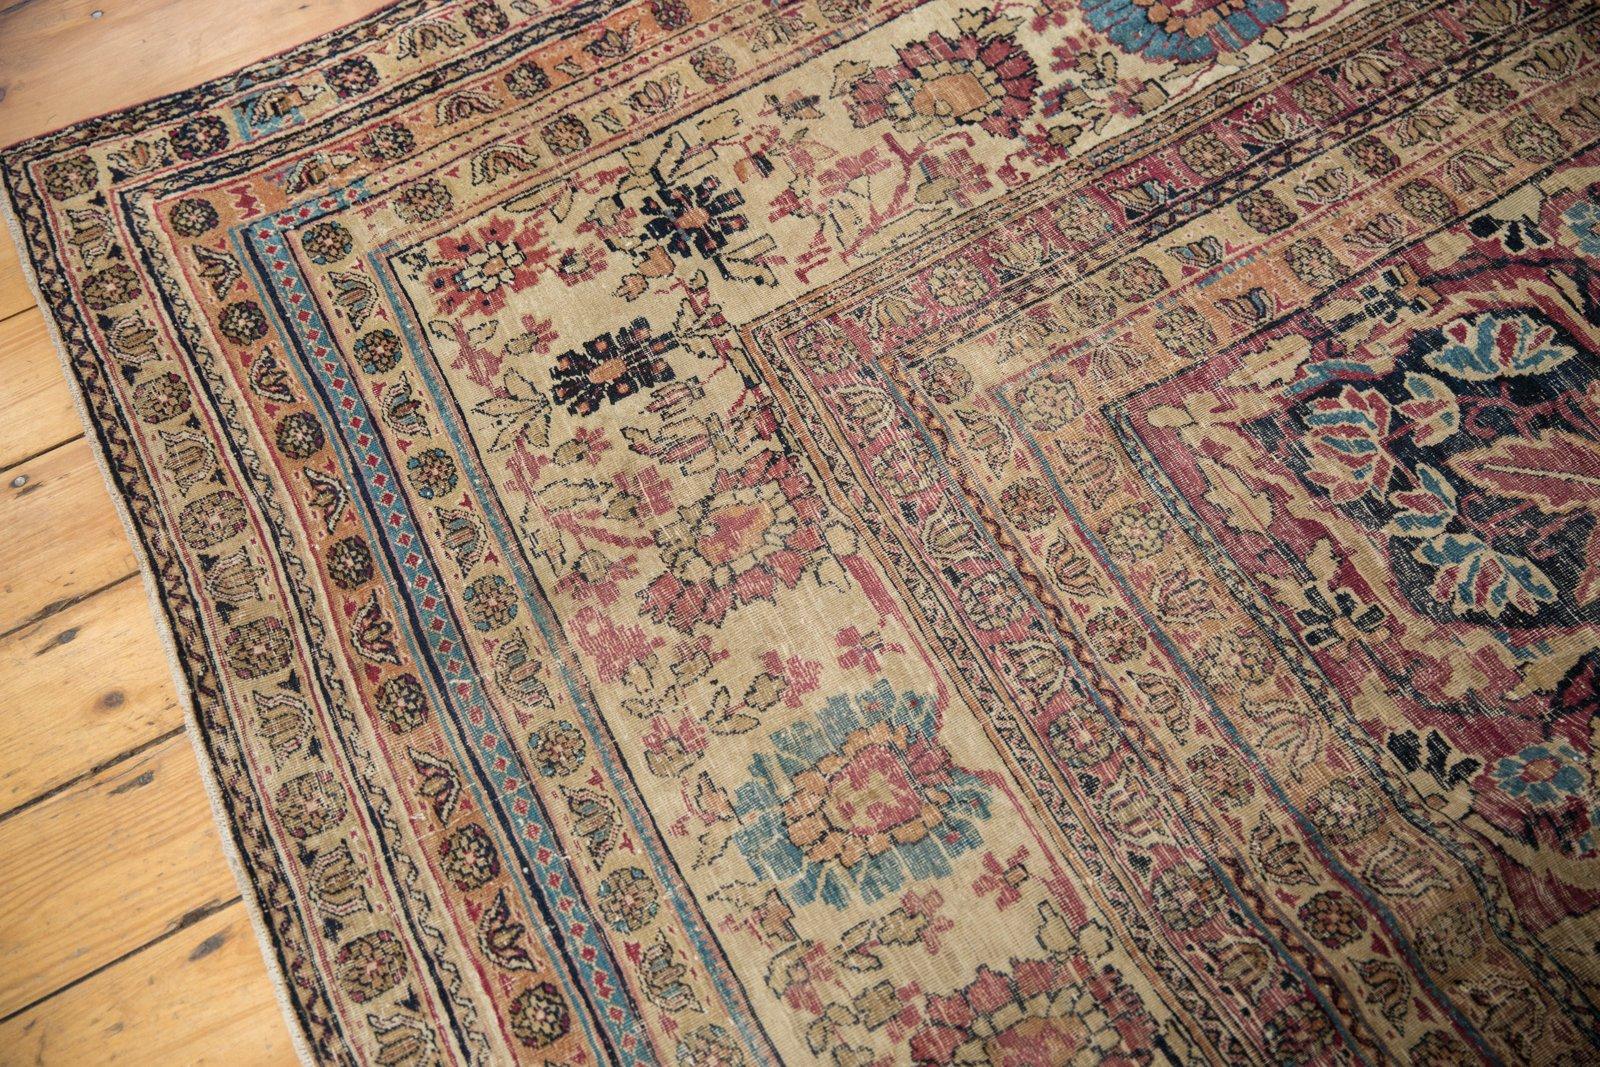 19th Century Antique Kermanshah Carpet For Sale